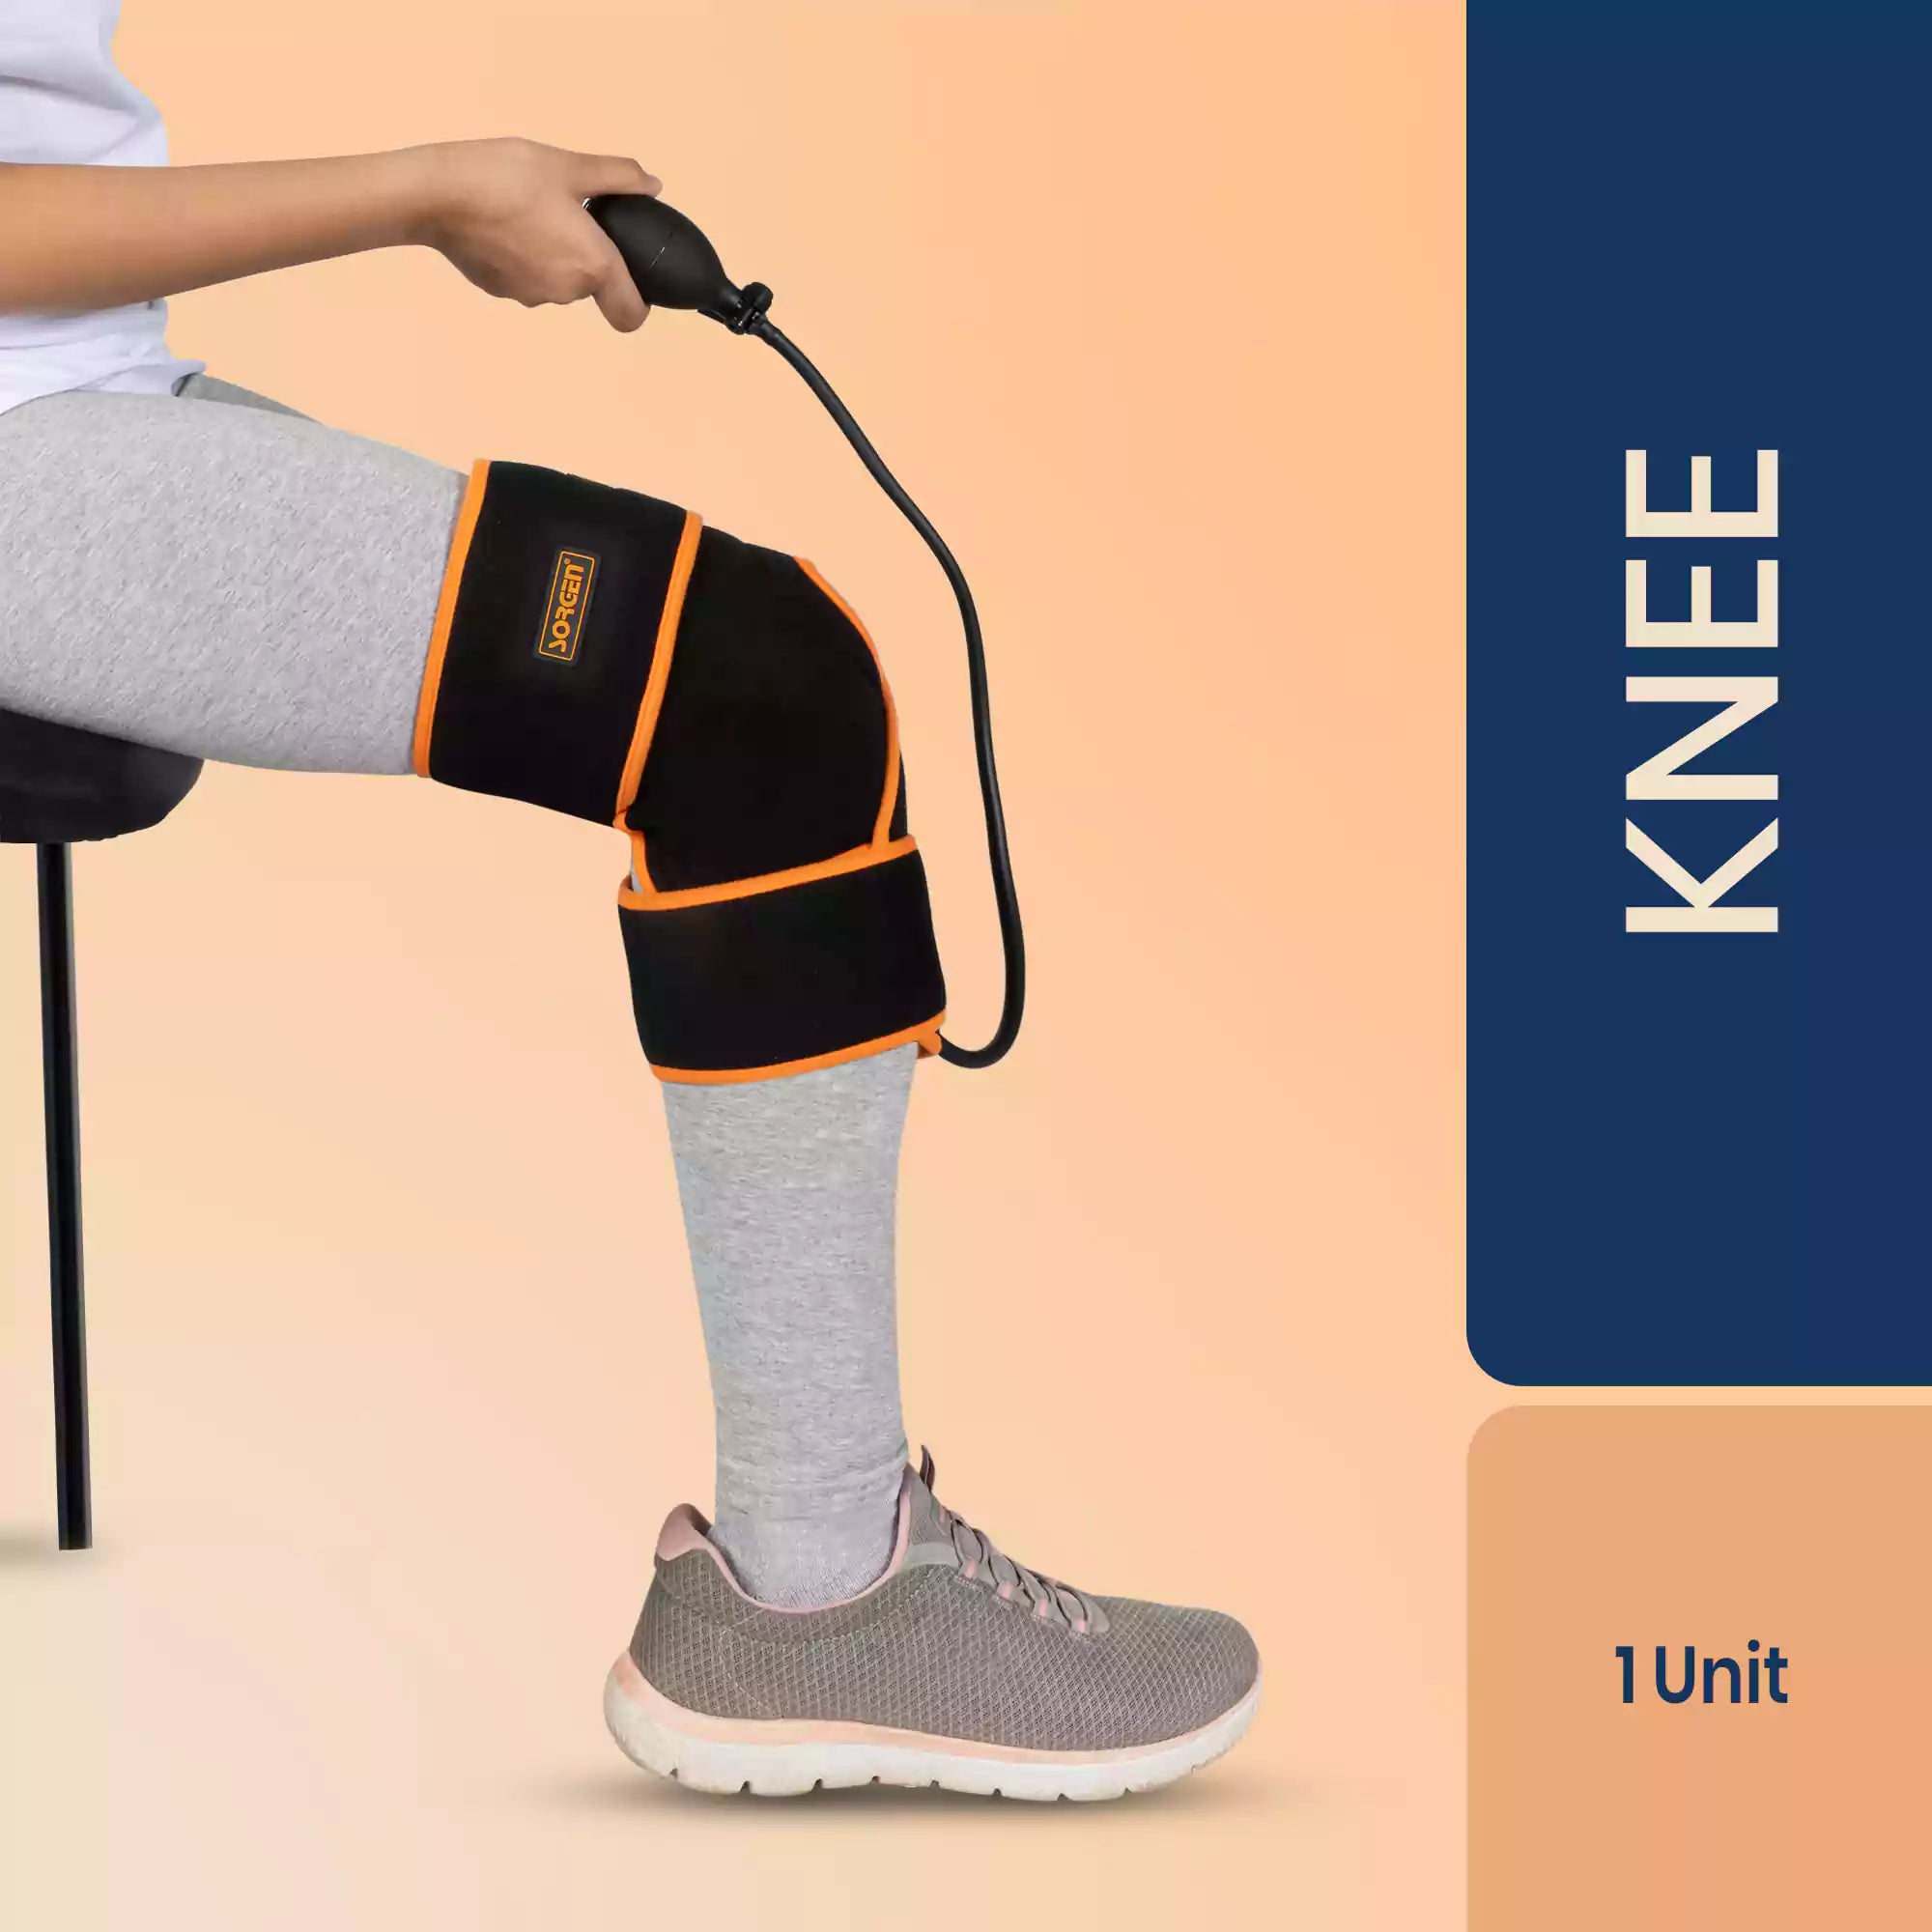 knee wrap - compression wrap